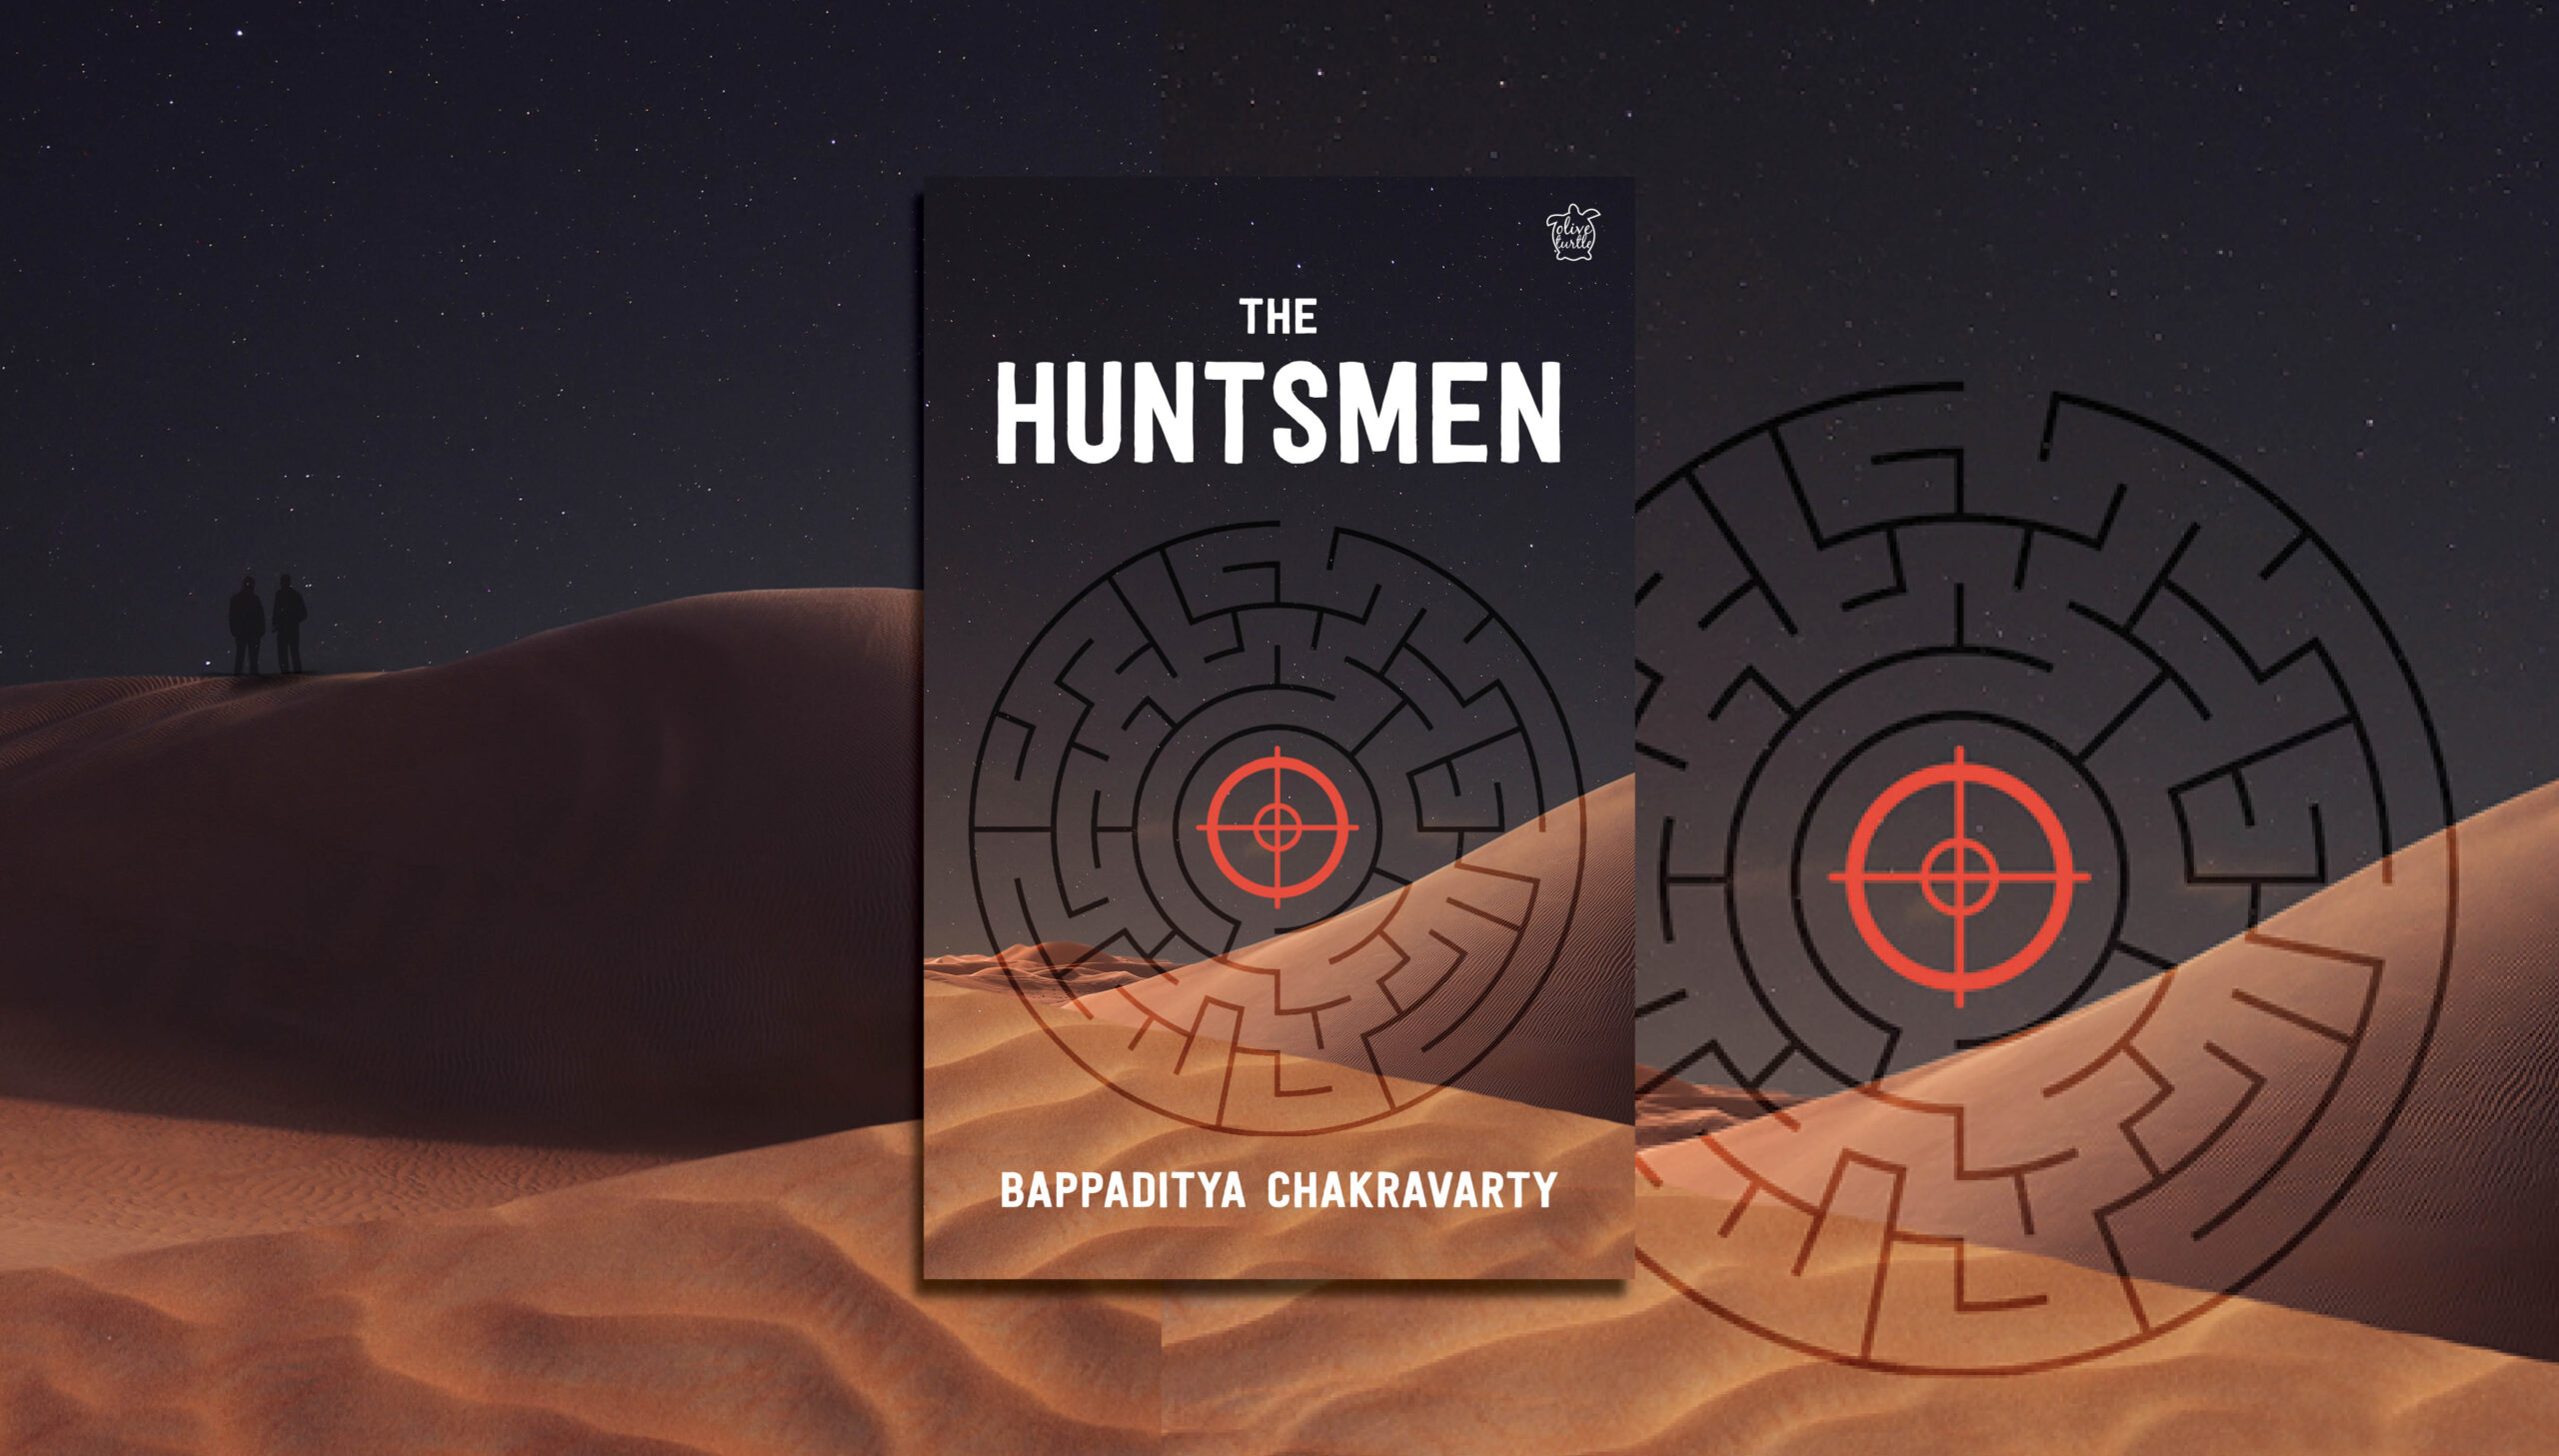 New Release: THE HUNTSMEN by Bappaditya Chakravarty